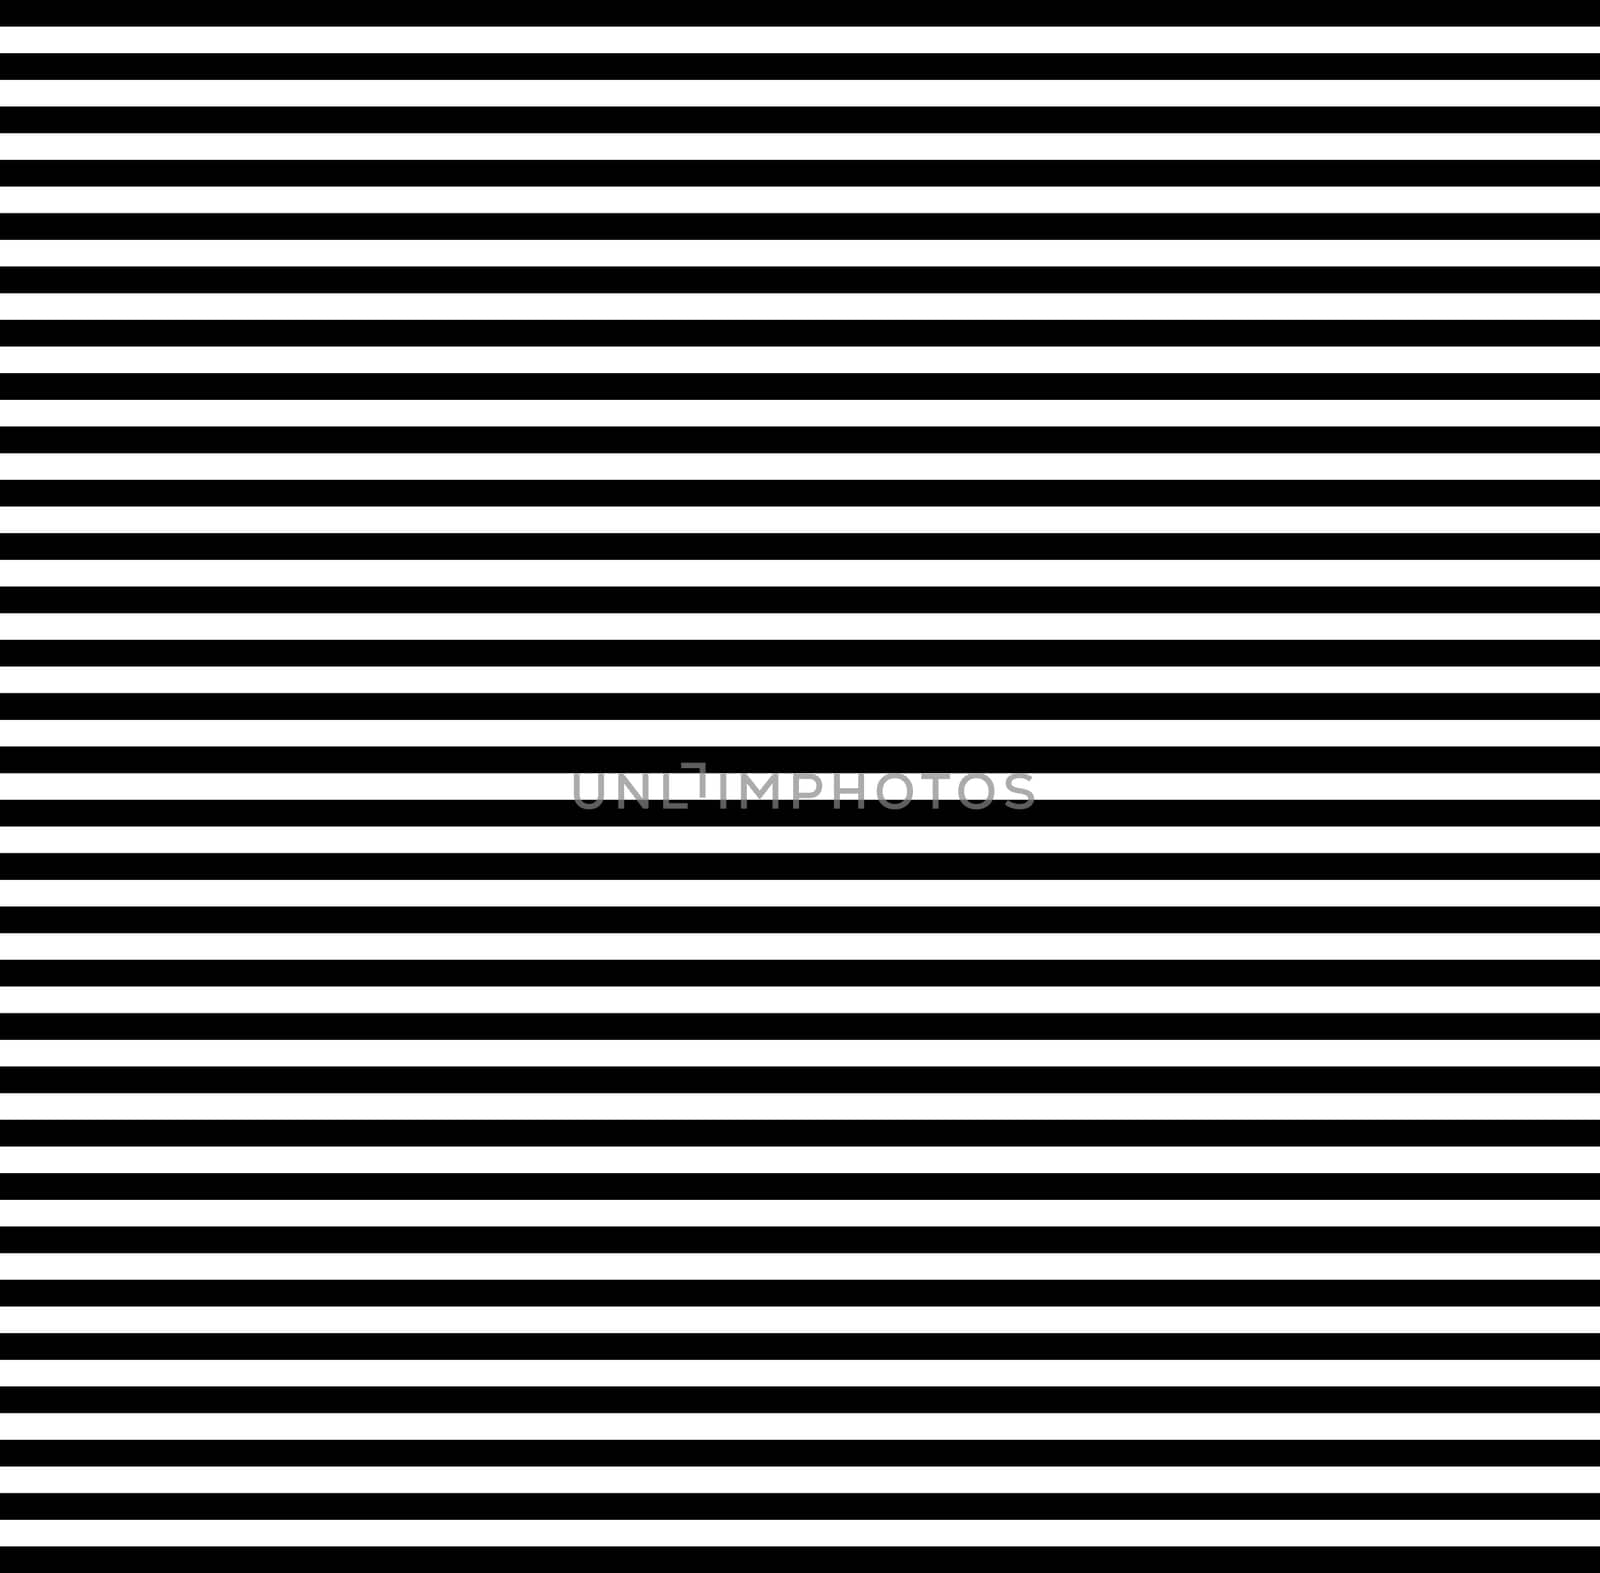 Backgrounds horizontal lines stripes, different thickness intensity, horizontal stripe design by koksikoks